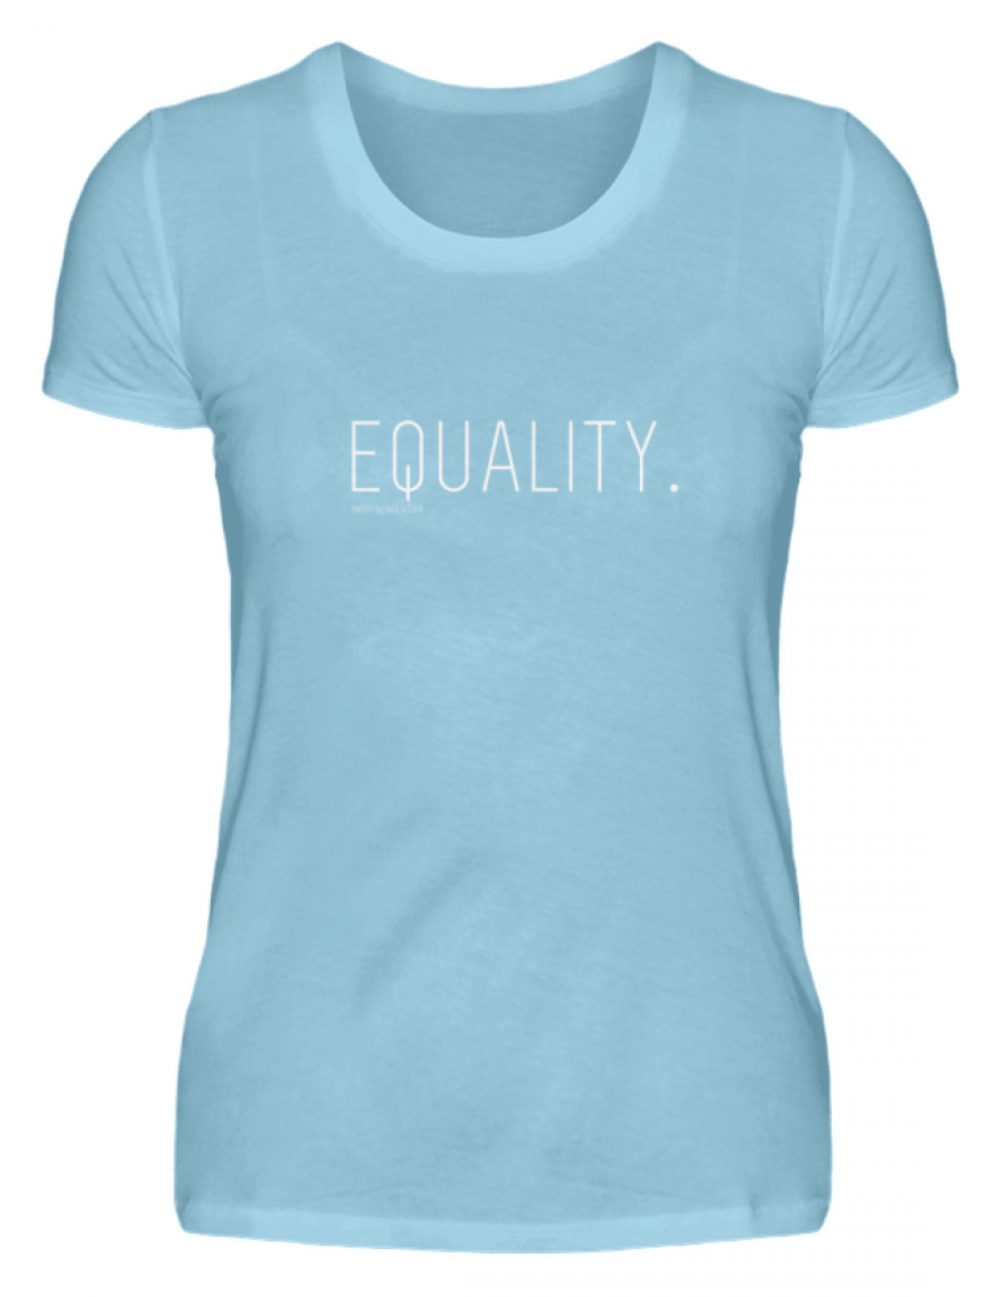 EQUALITY. - Damen Premiumshirt-674